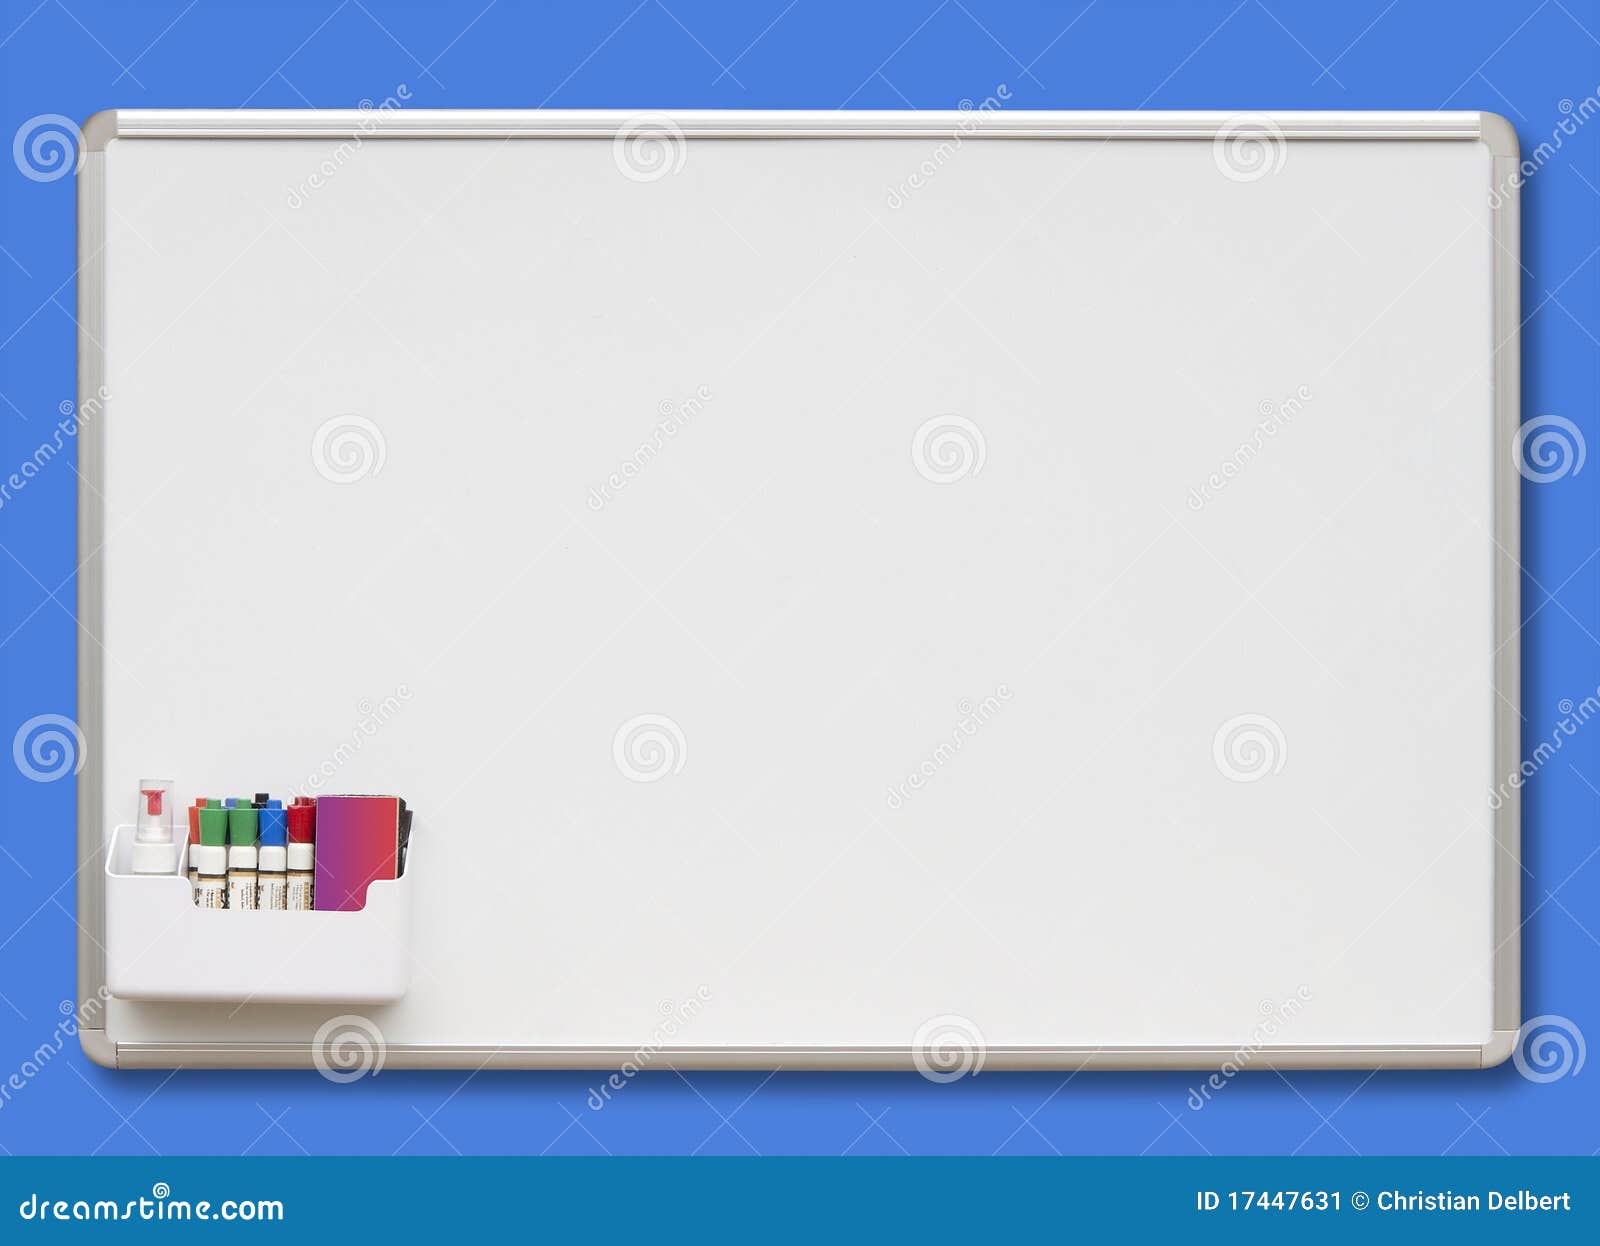 white board on blue, 